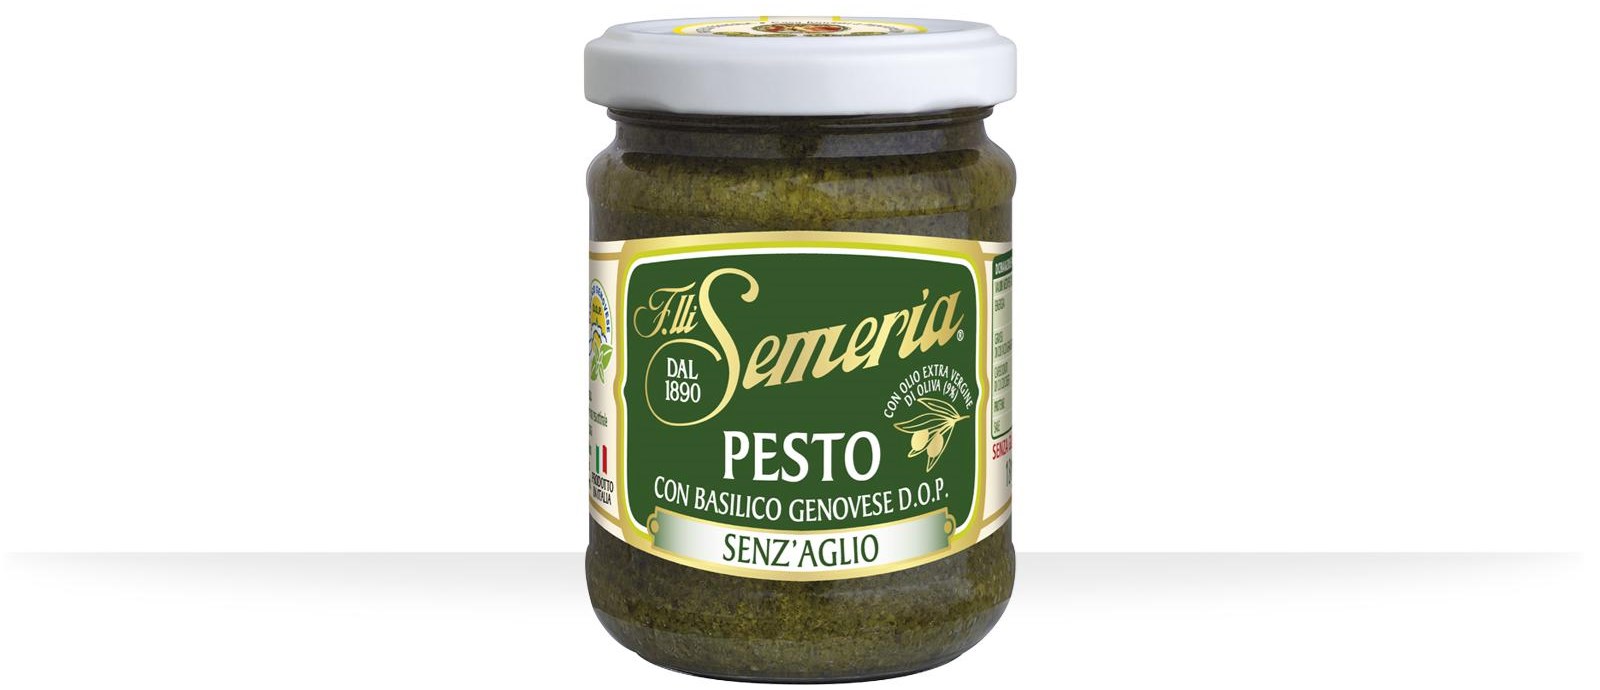 Pesto con basilico Genovese DOP - senz'aglio